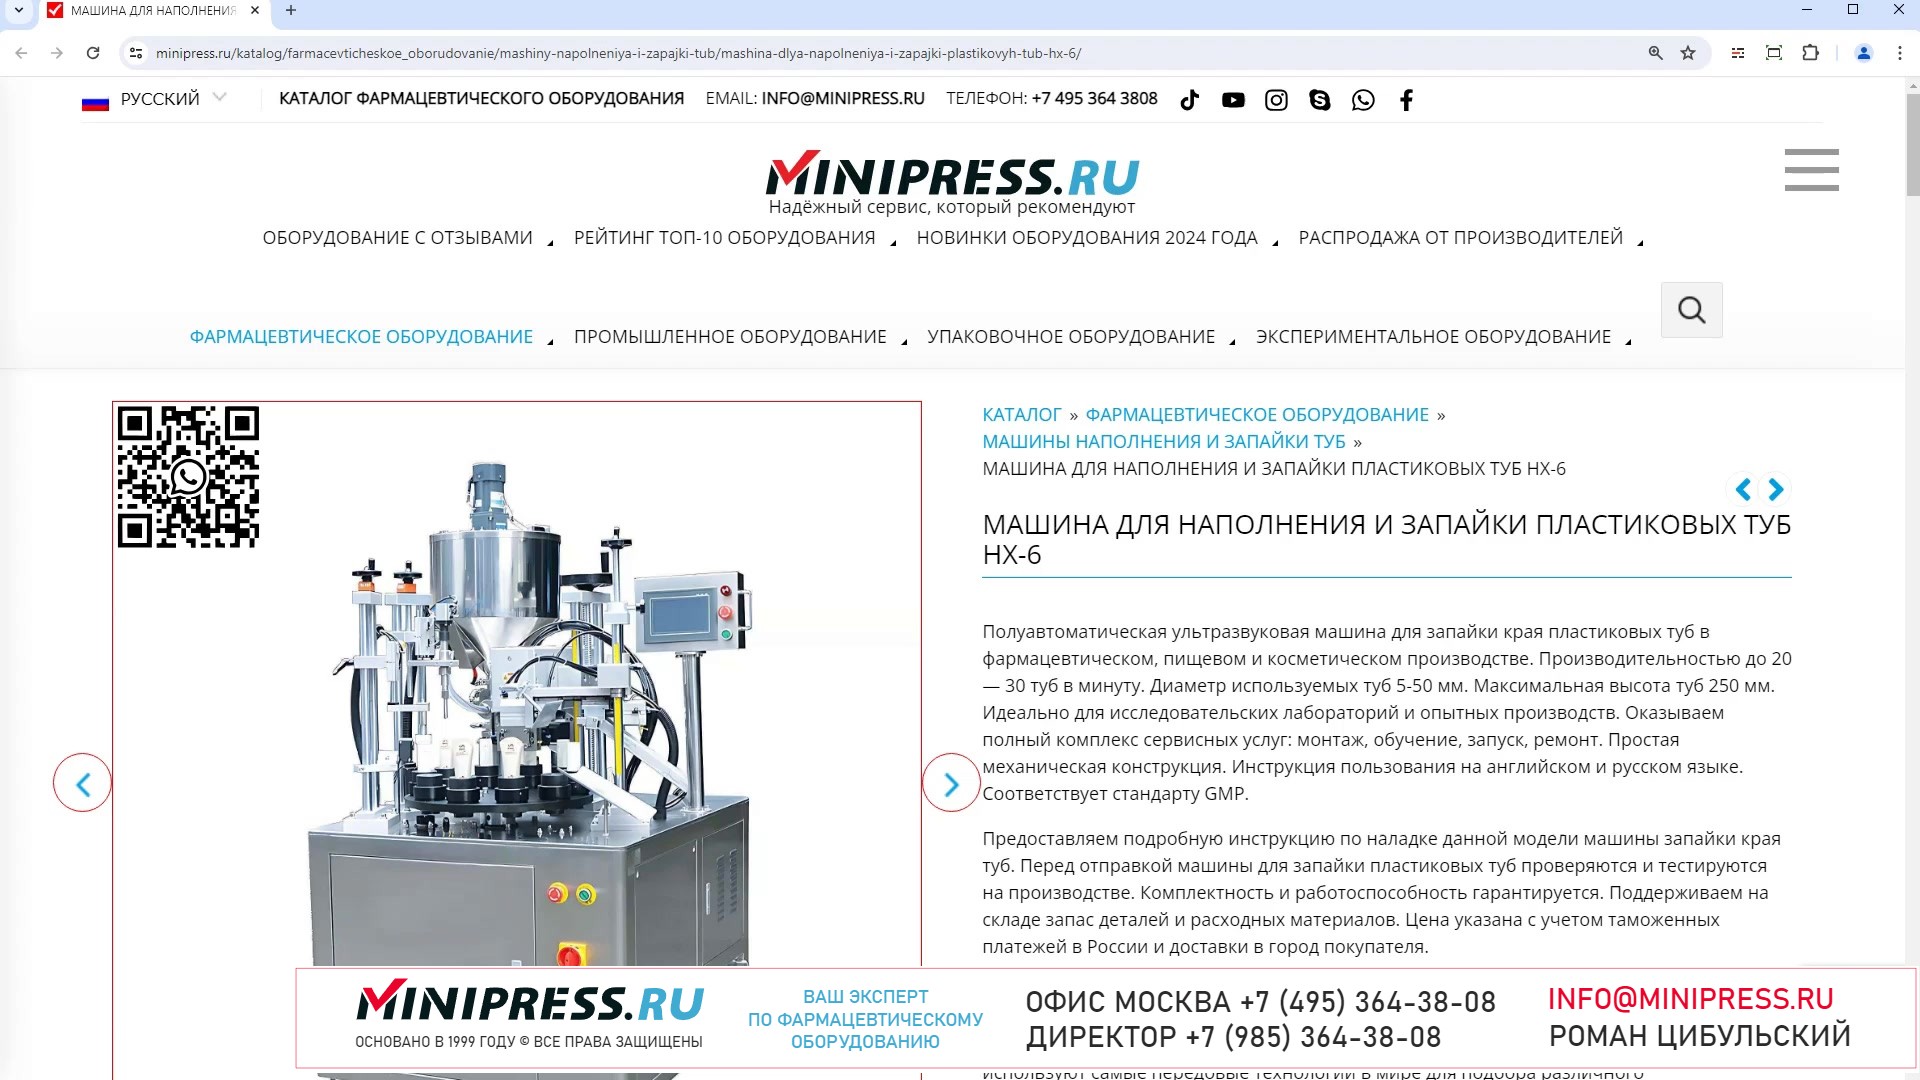 Minipress.ru Машина для наполнения и запайки пластиковых туб HX-6